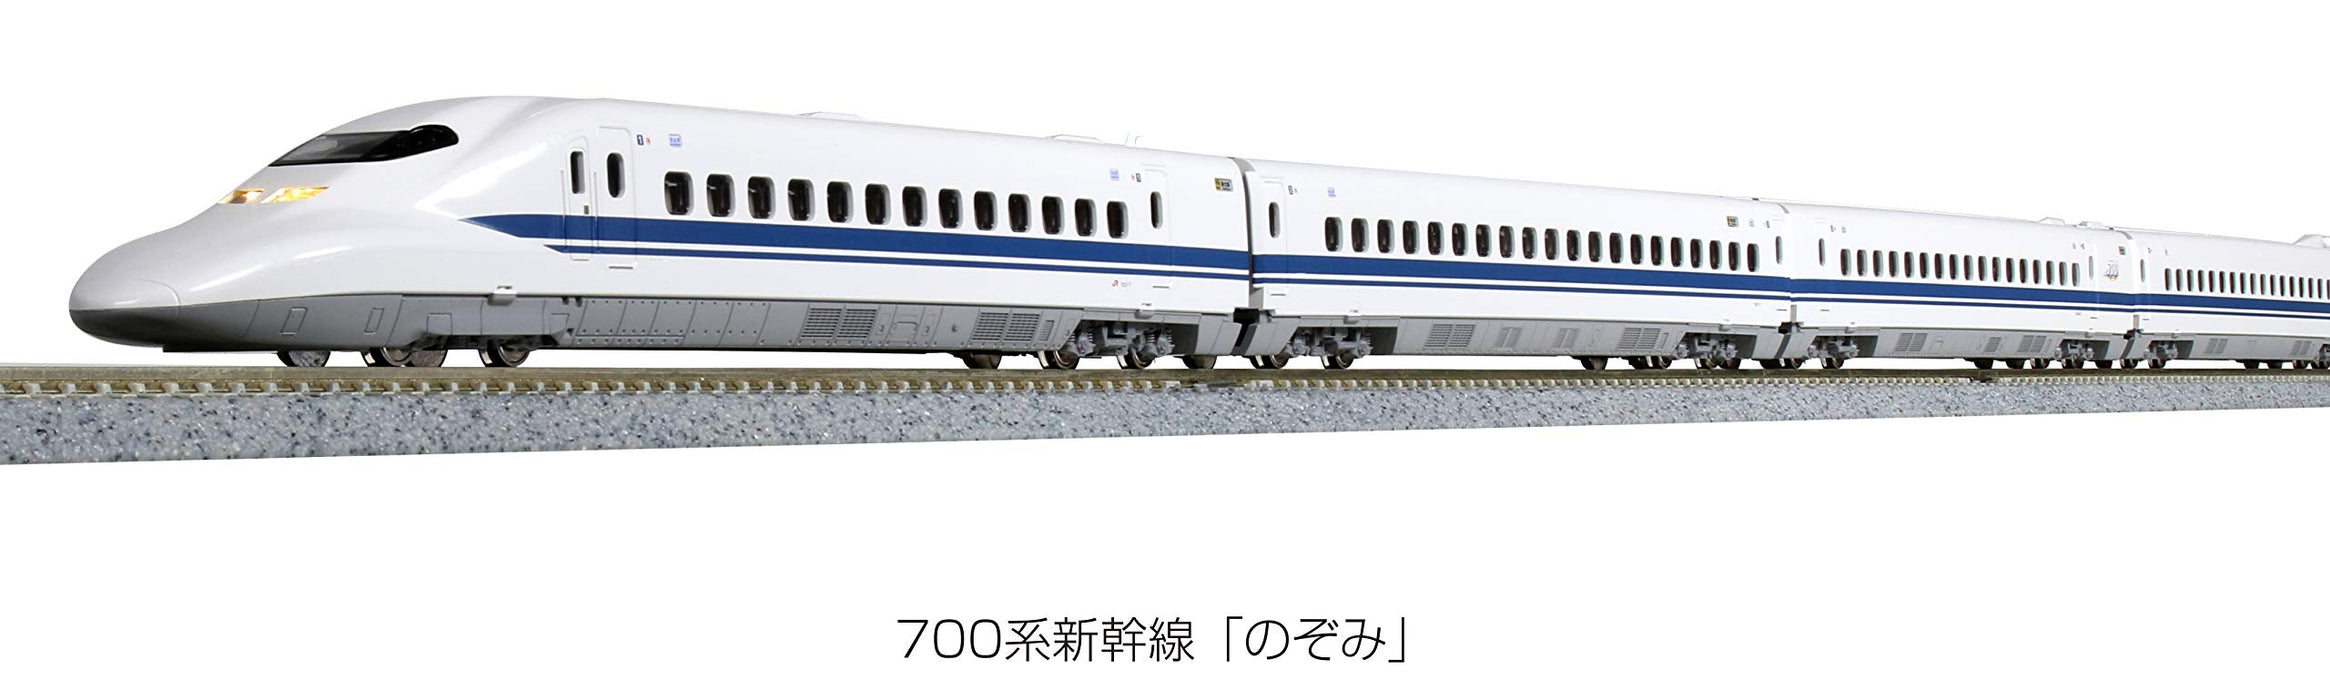 Kato N Gauge 700 Series Nozomi 8-Car Basic Set - Shinkansen Model Train 10-1645